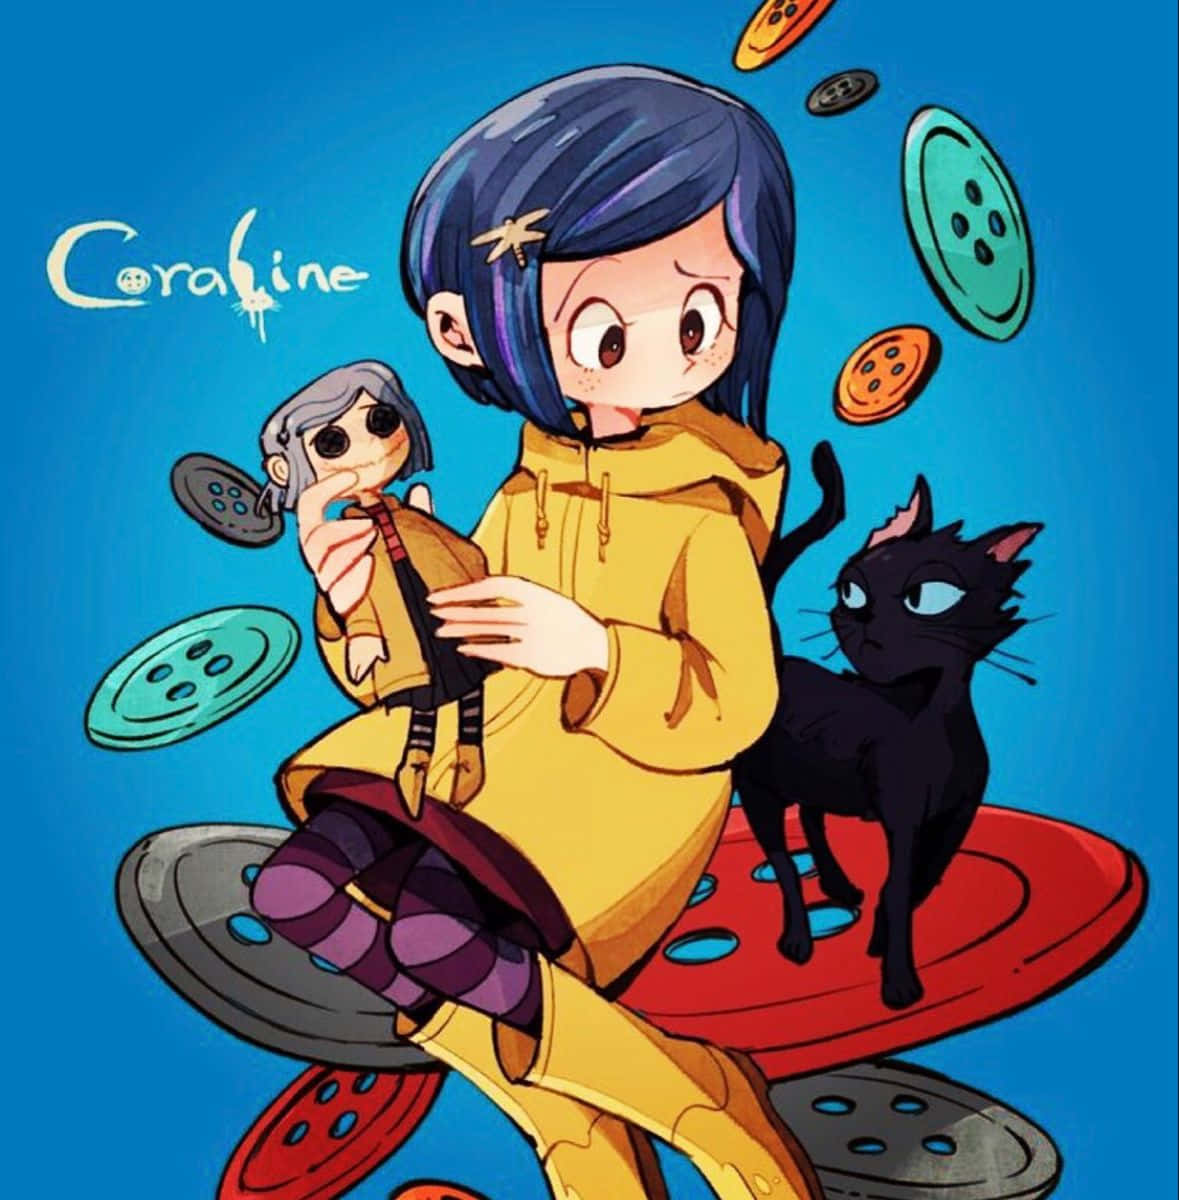 Amazon.com: Poster Coraline Anime (11 x 17): Posters & Prints